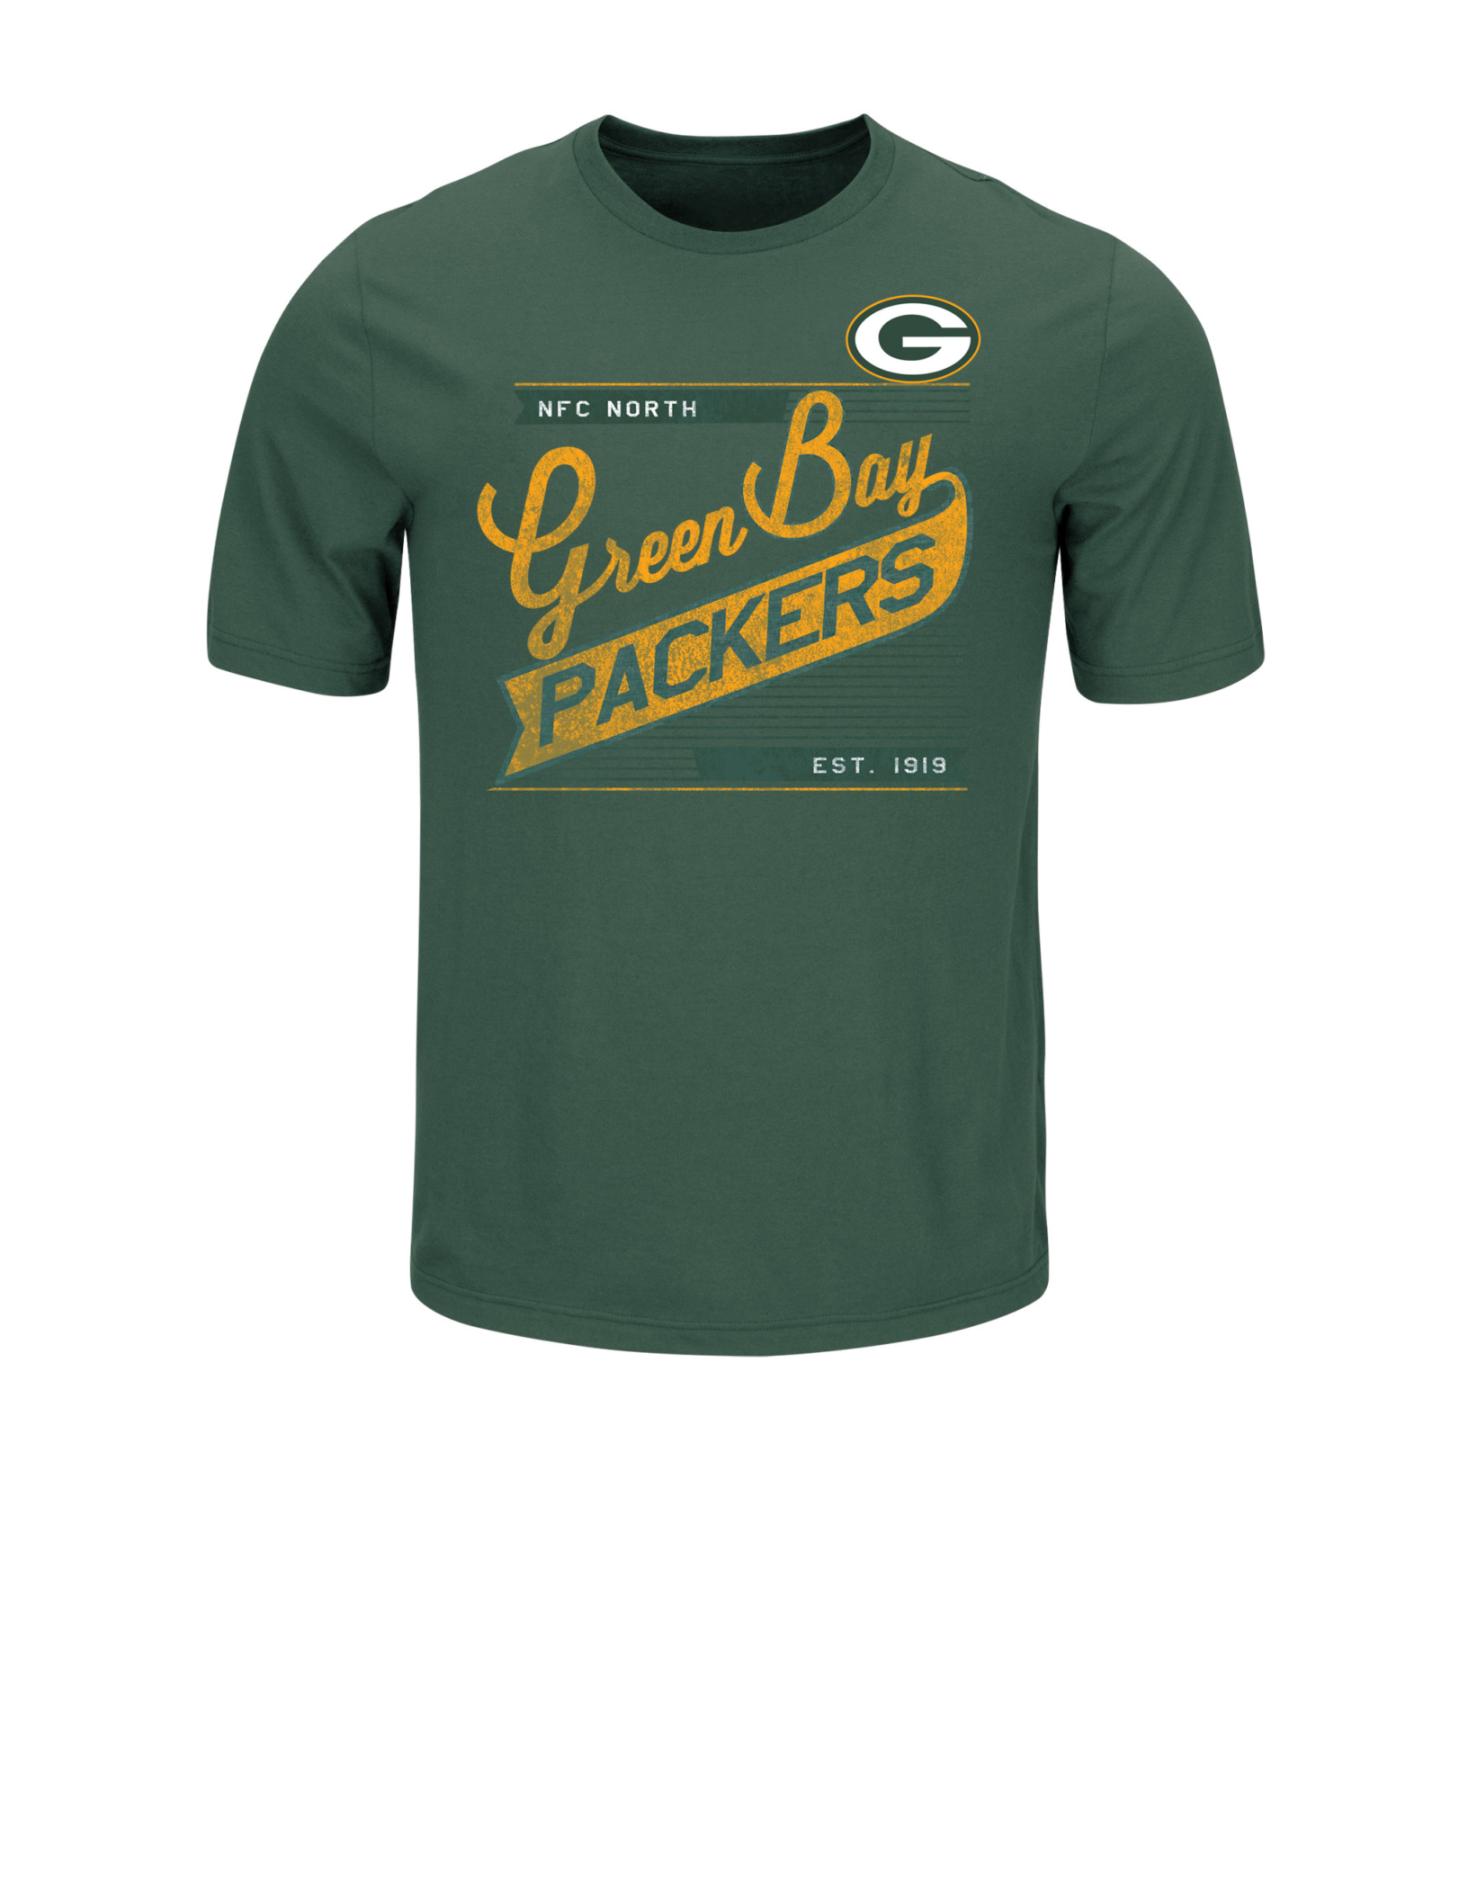 NFL Men's T-Shirt - Green Bay Packers